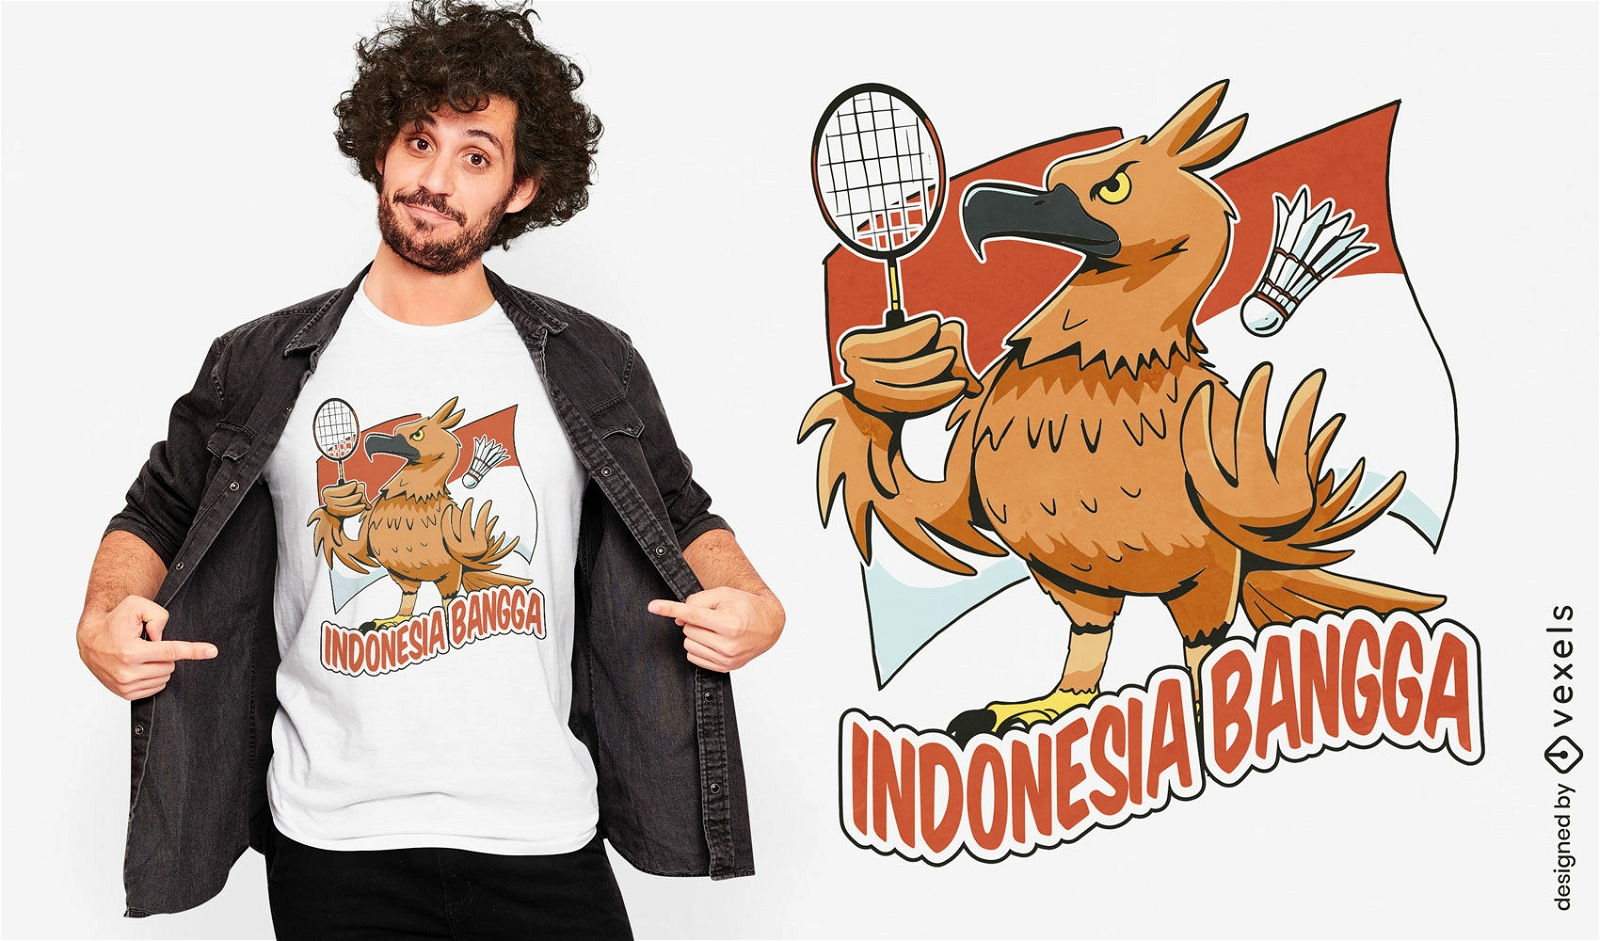 Indonesia bird playing sport t-shirt design